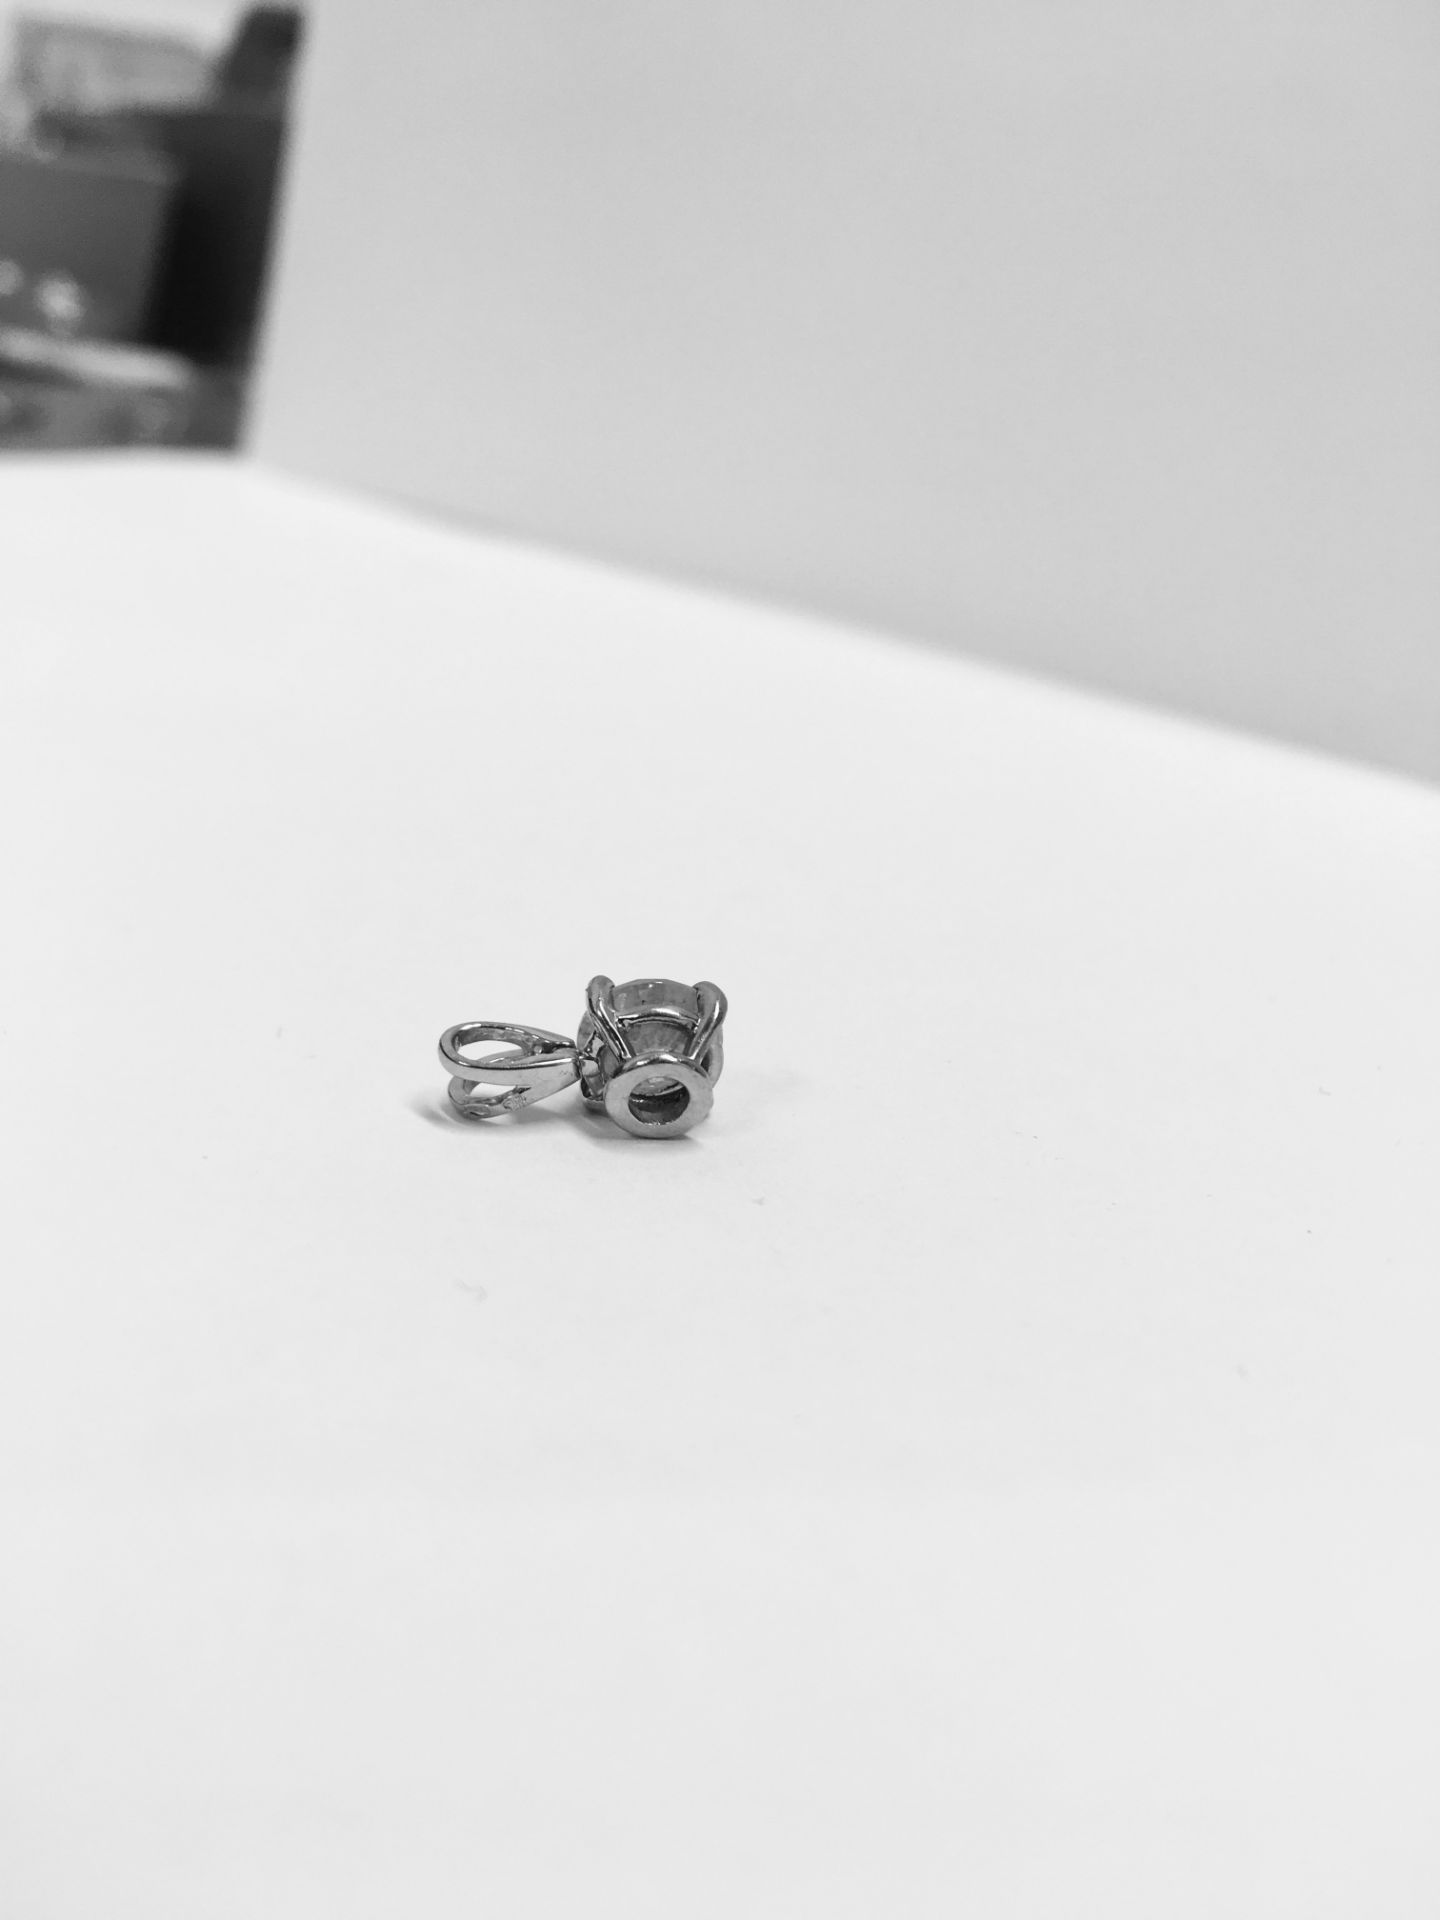 Platinum diamond pendant,1ct diamond 9enhanced ) h colour i2 clarity,1.8gms plainum uk hallmark , - Image 2 of 2